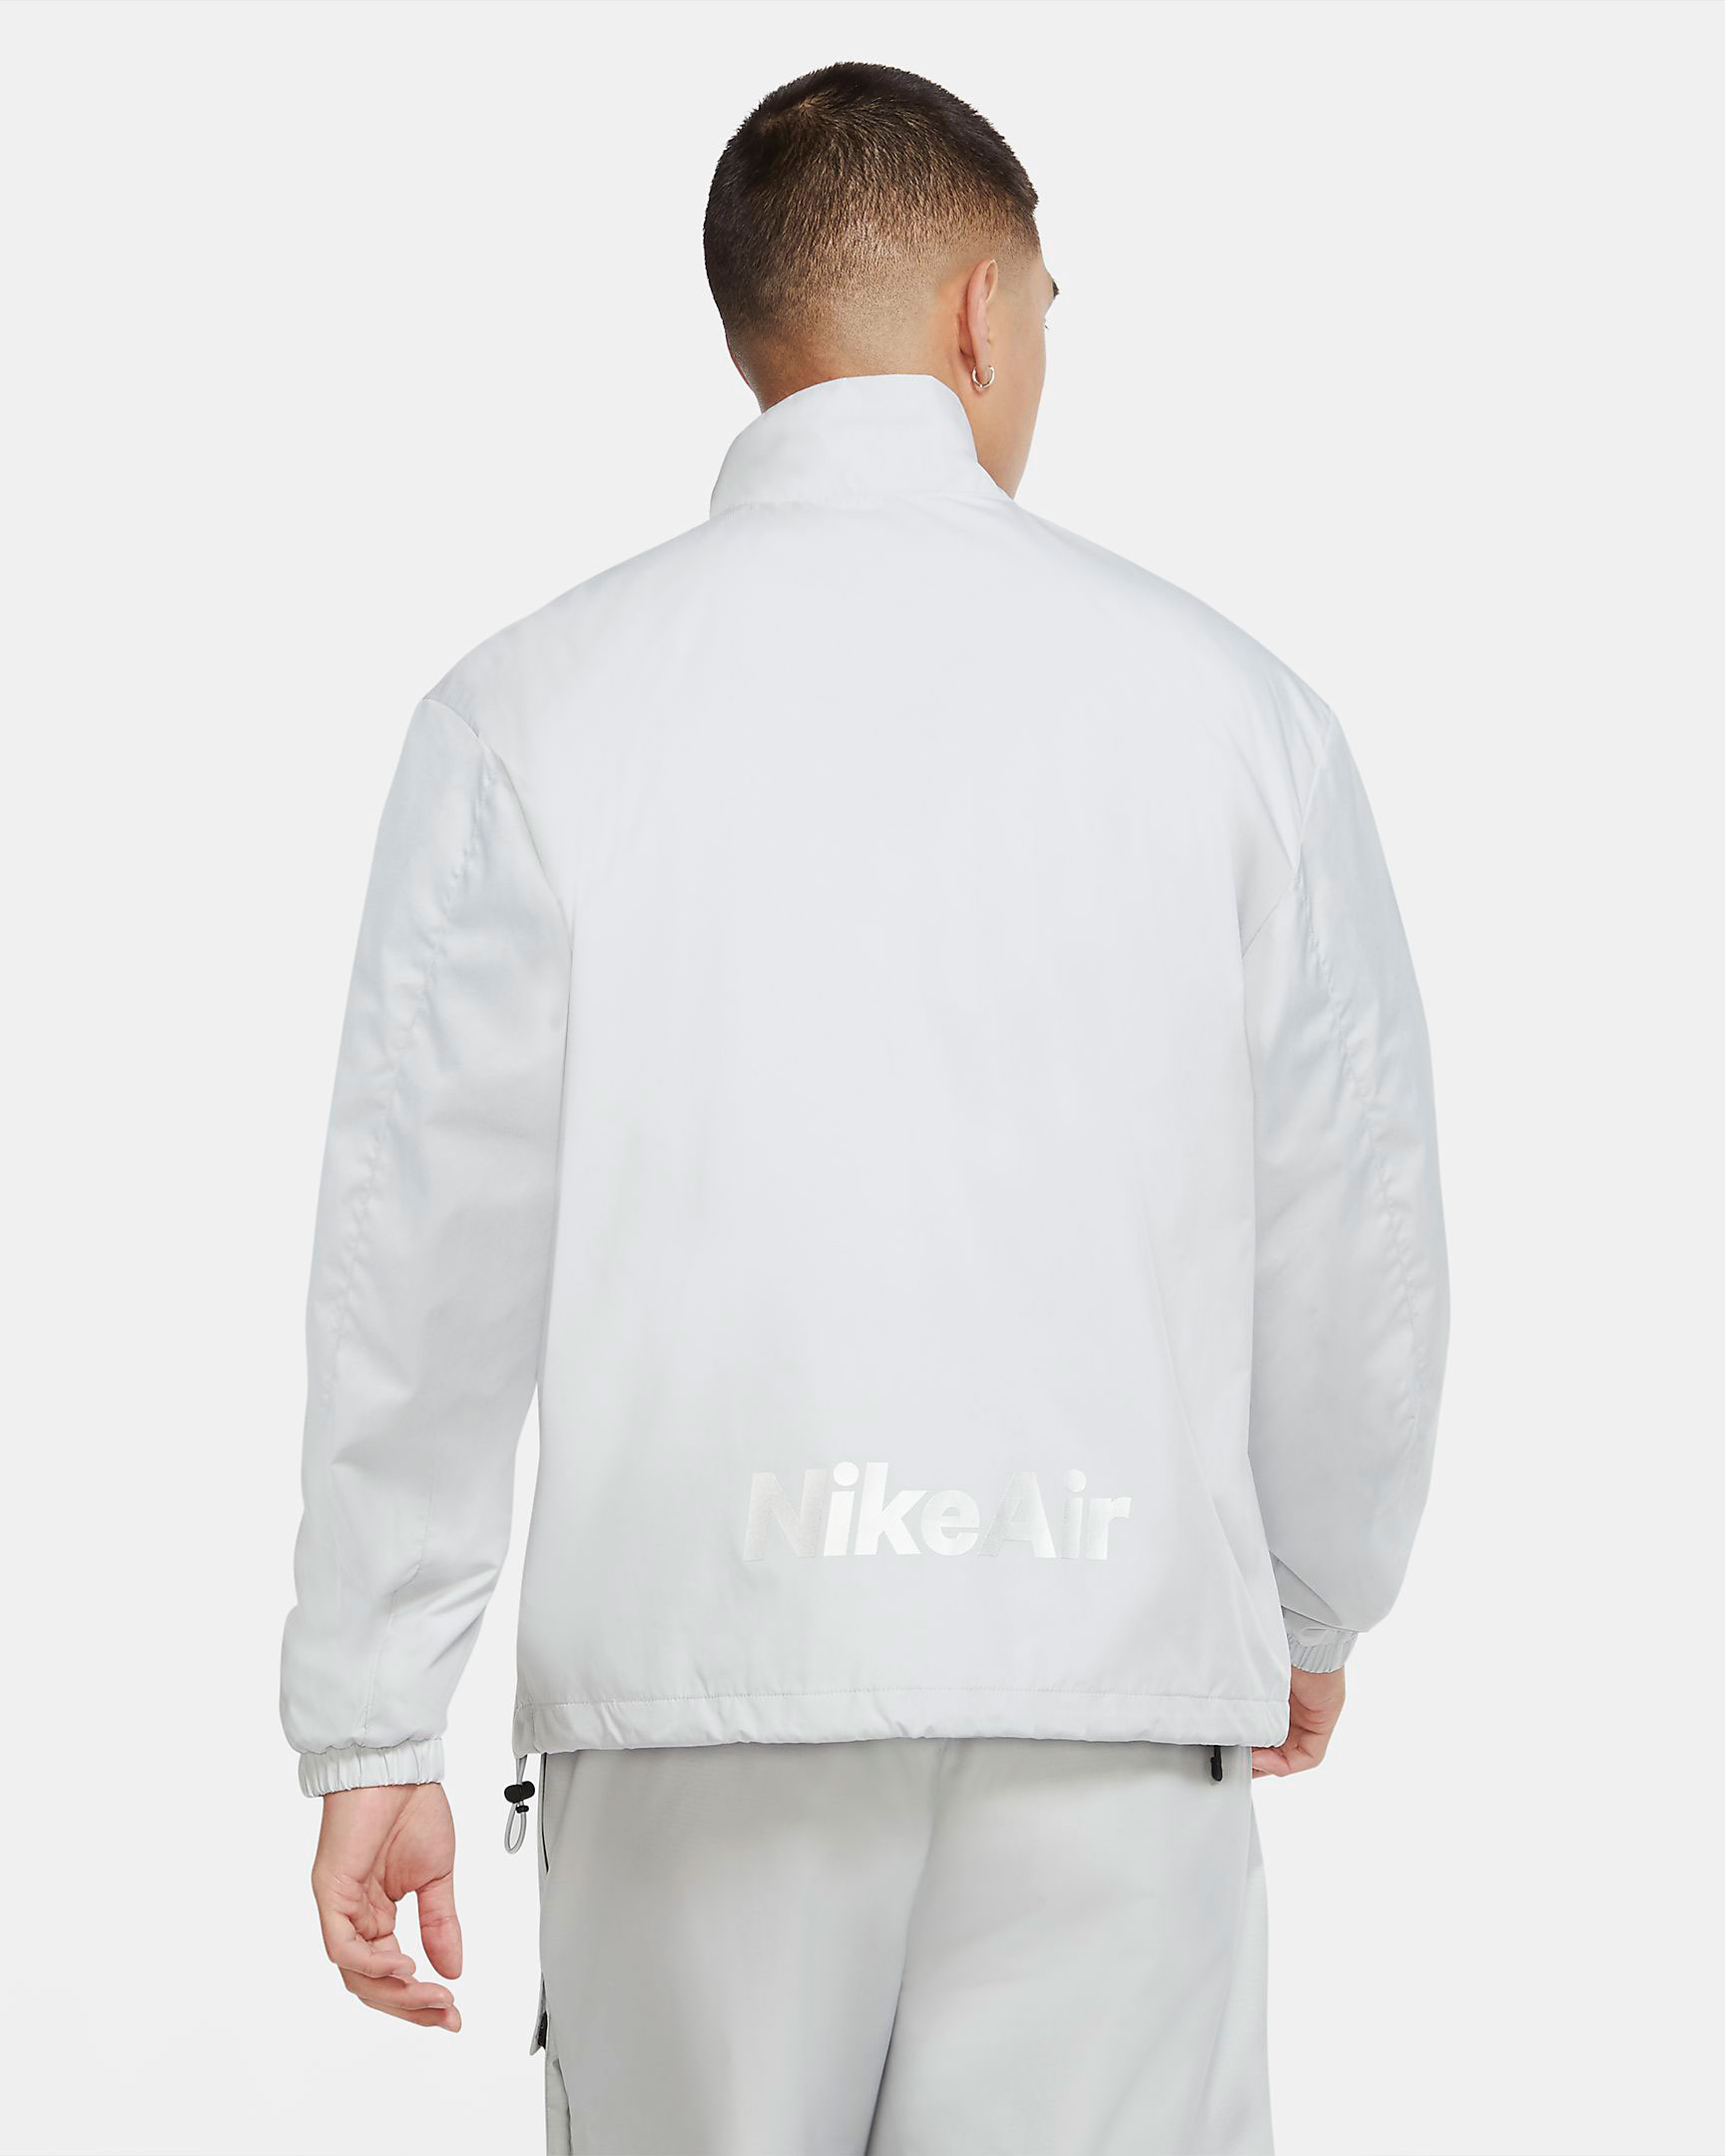 nike-air-utility-reflective-jacket-grey-black-blue-2